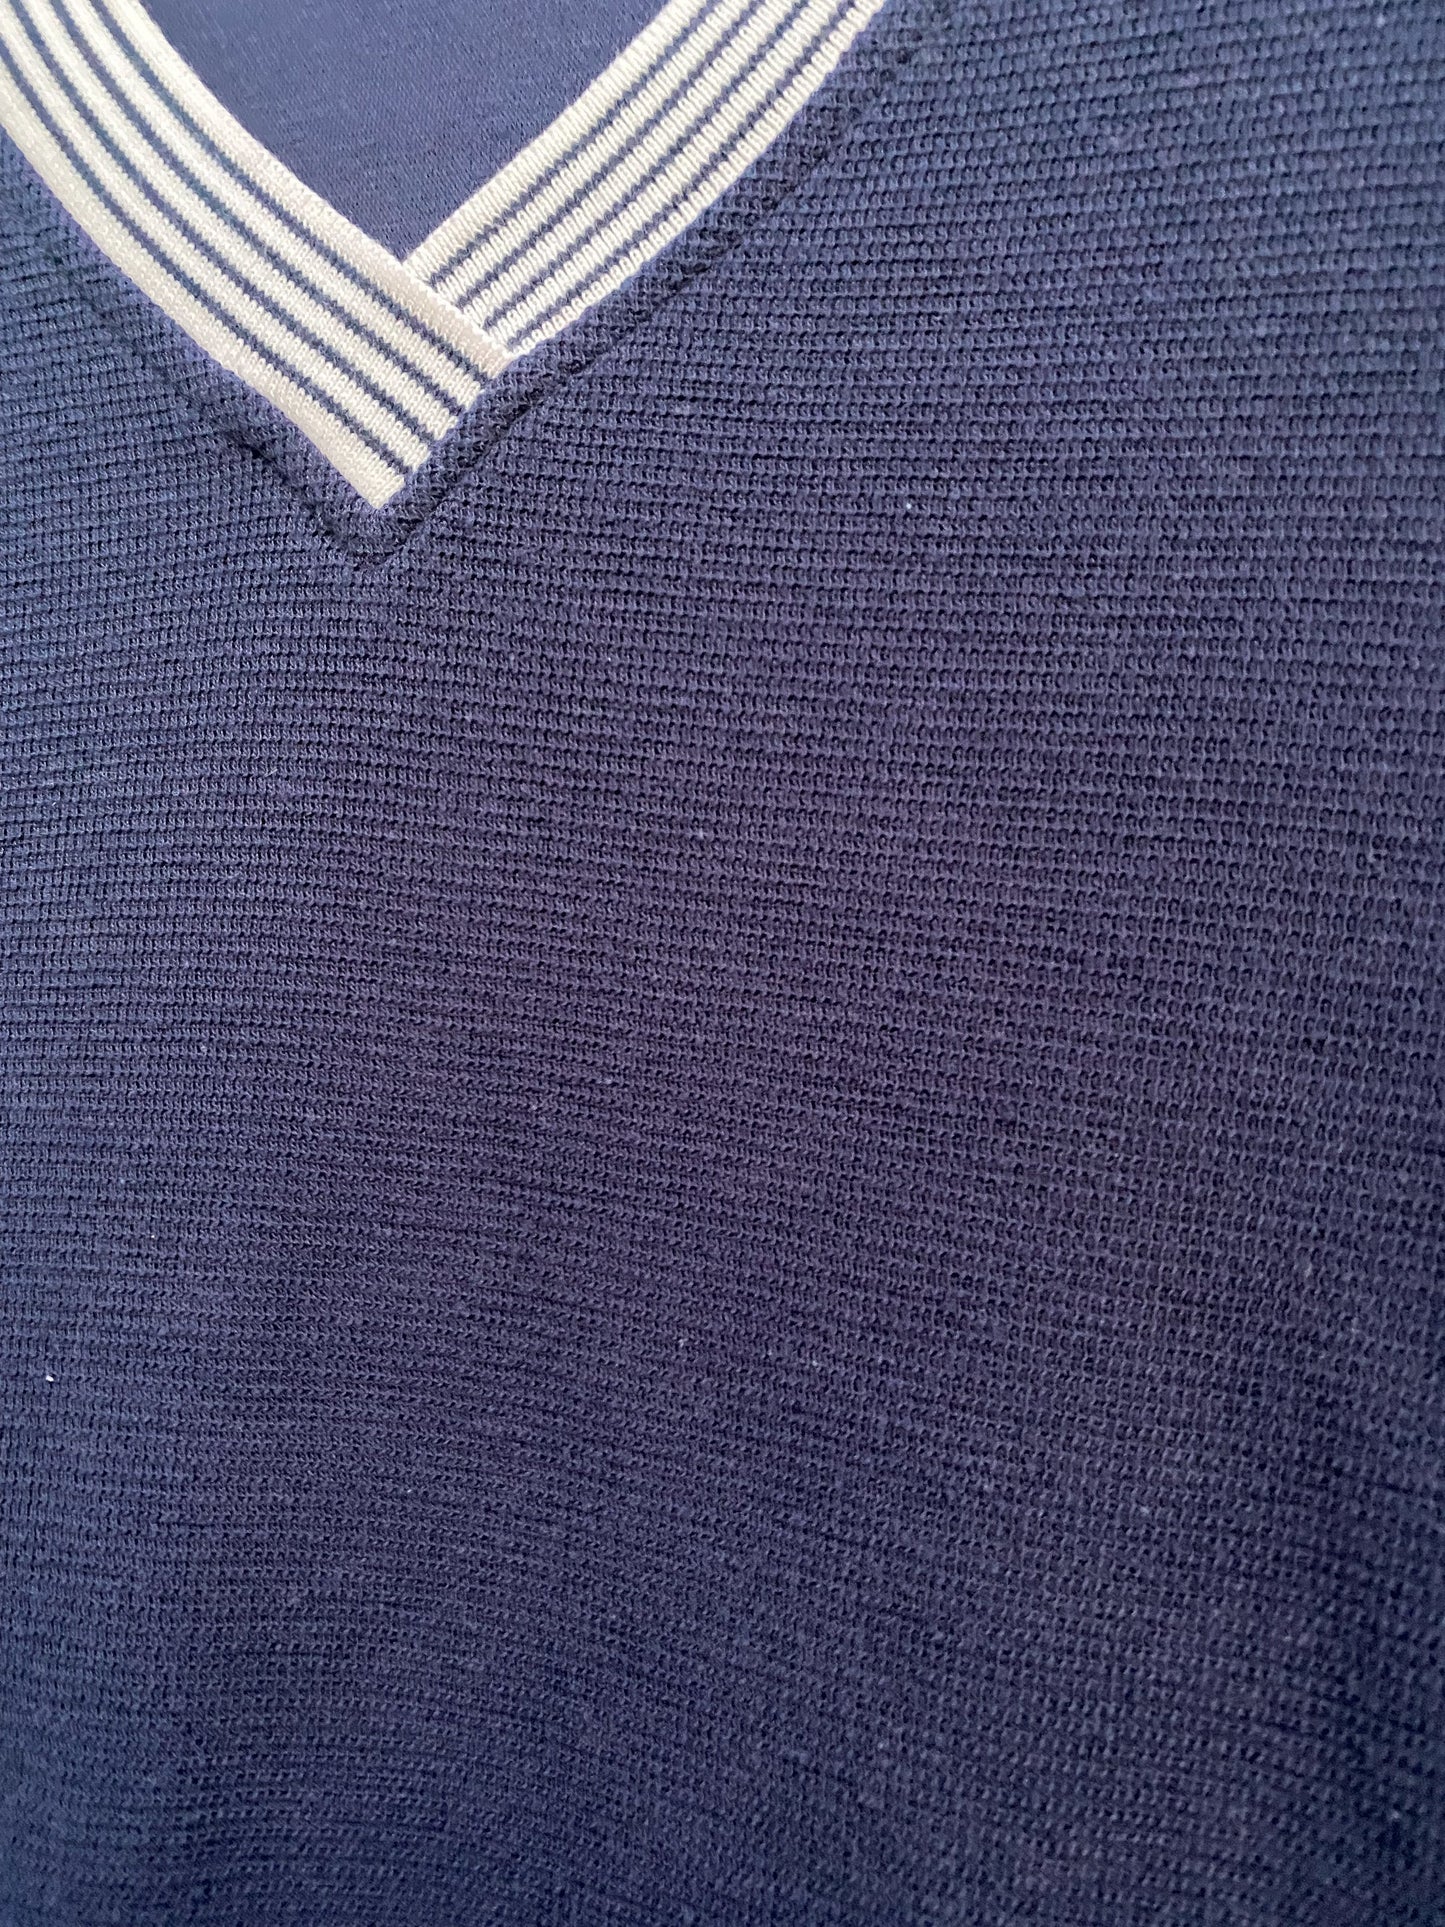 80s 90s Navy V Neck Ringer Stripe TShirt